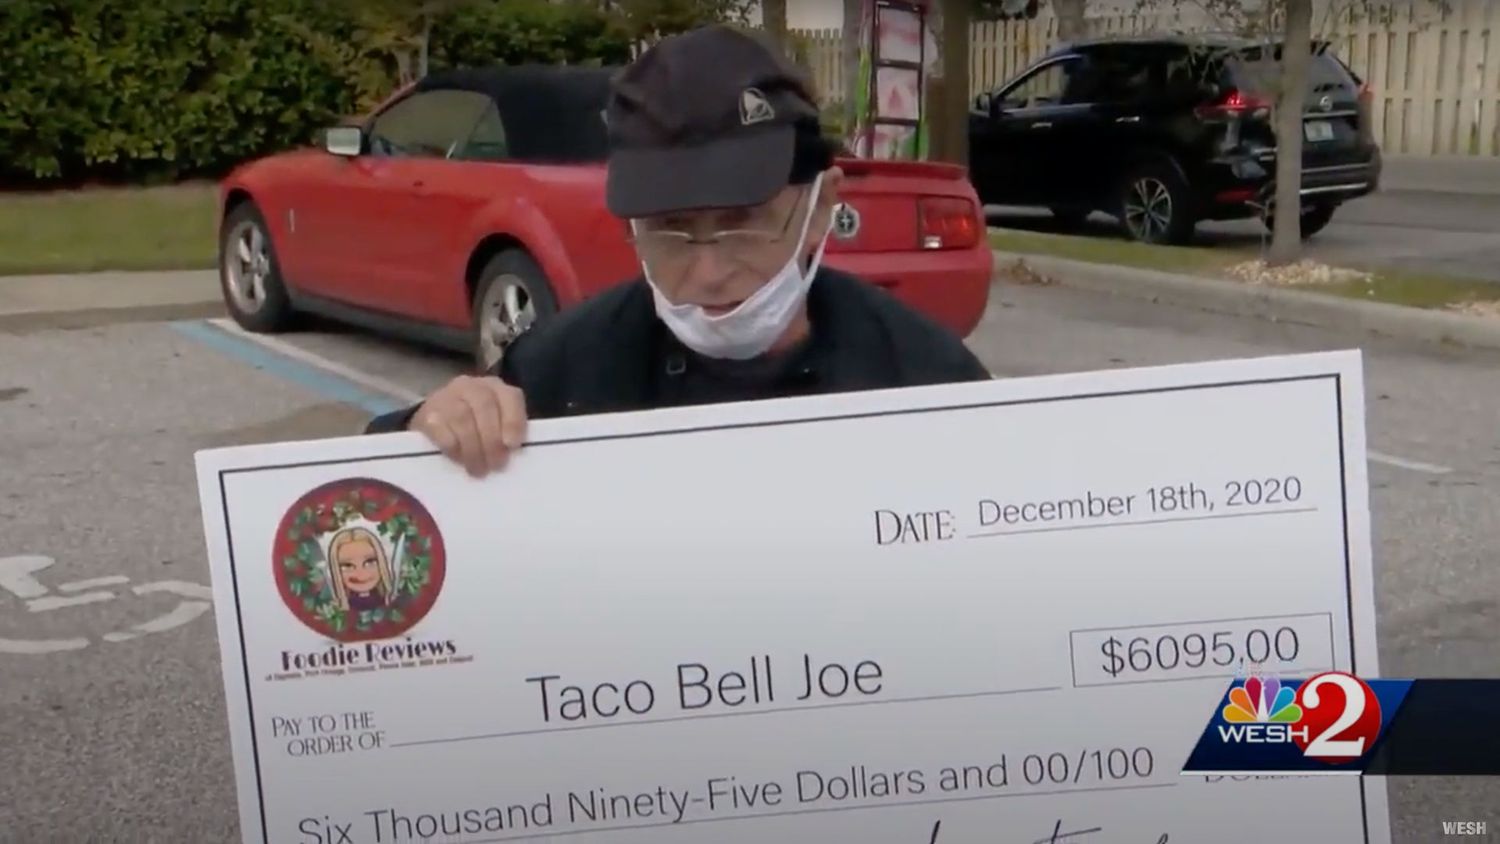 Taco Bell Joe